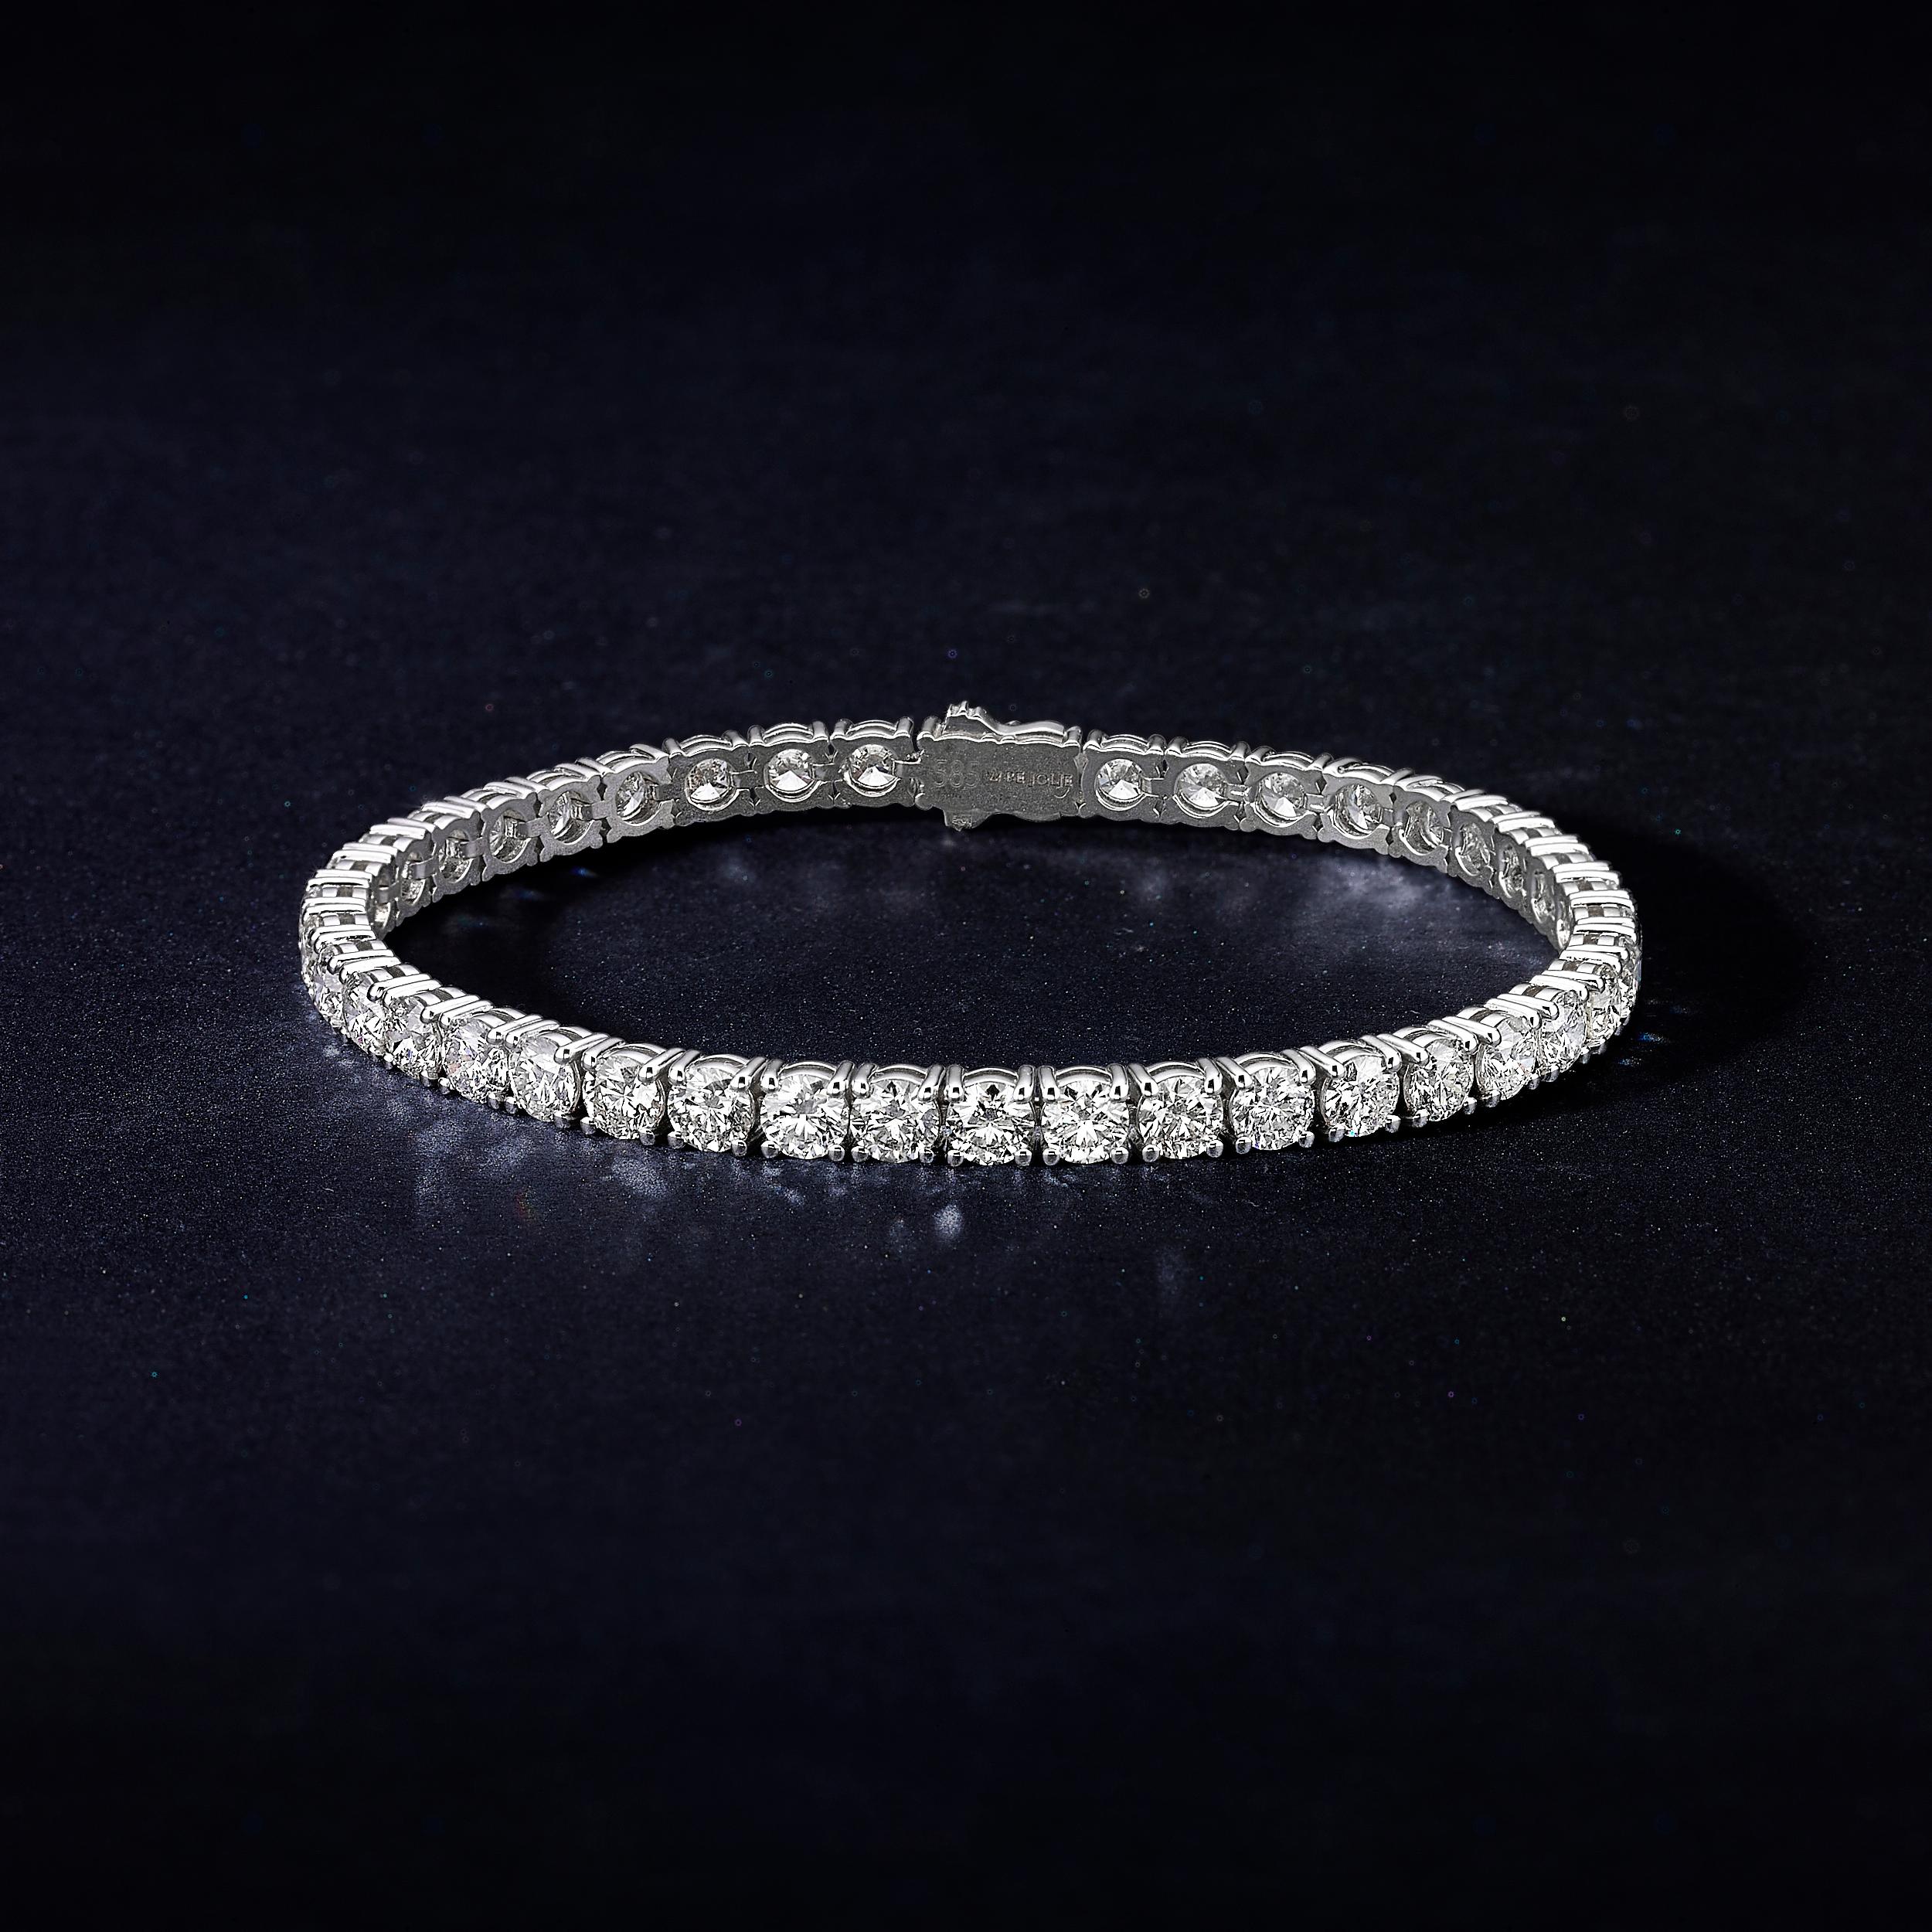 10 carat tennis bracelet price